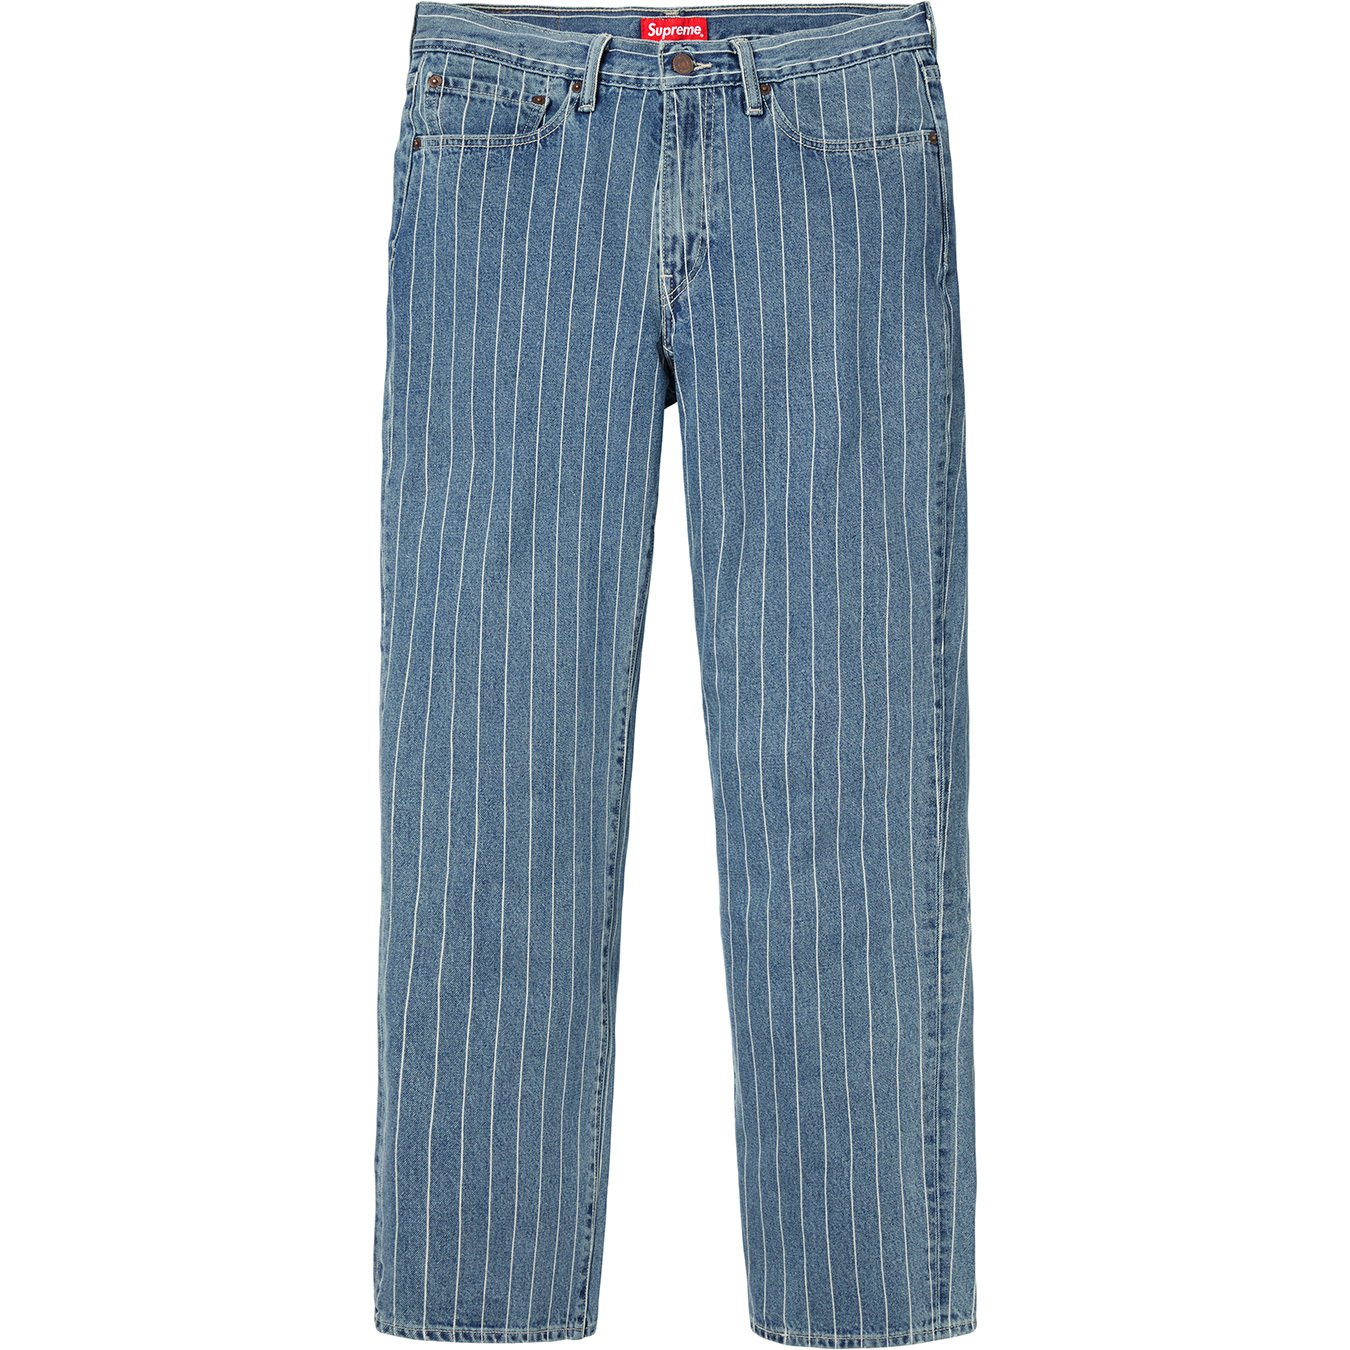 Supreme Levi's pinstripe 550 jeans 32